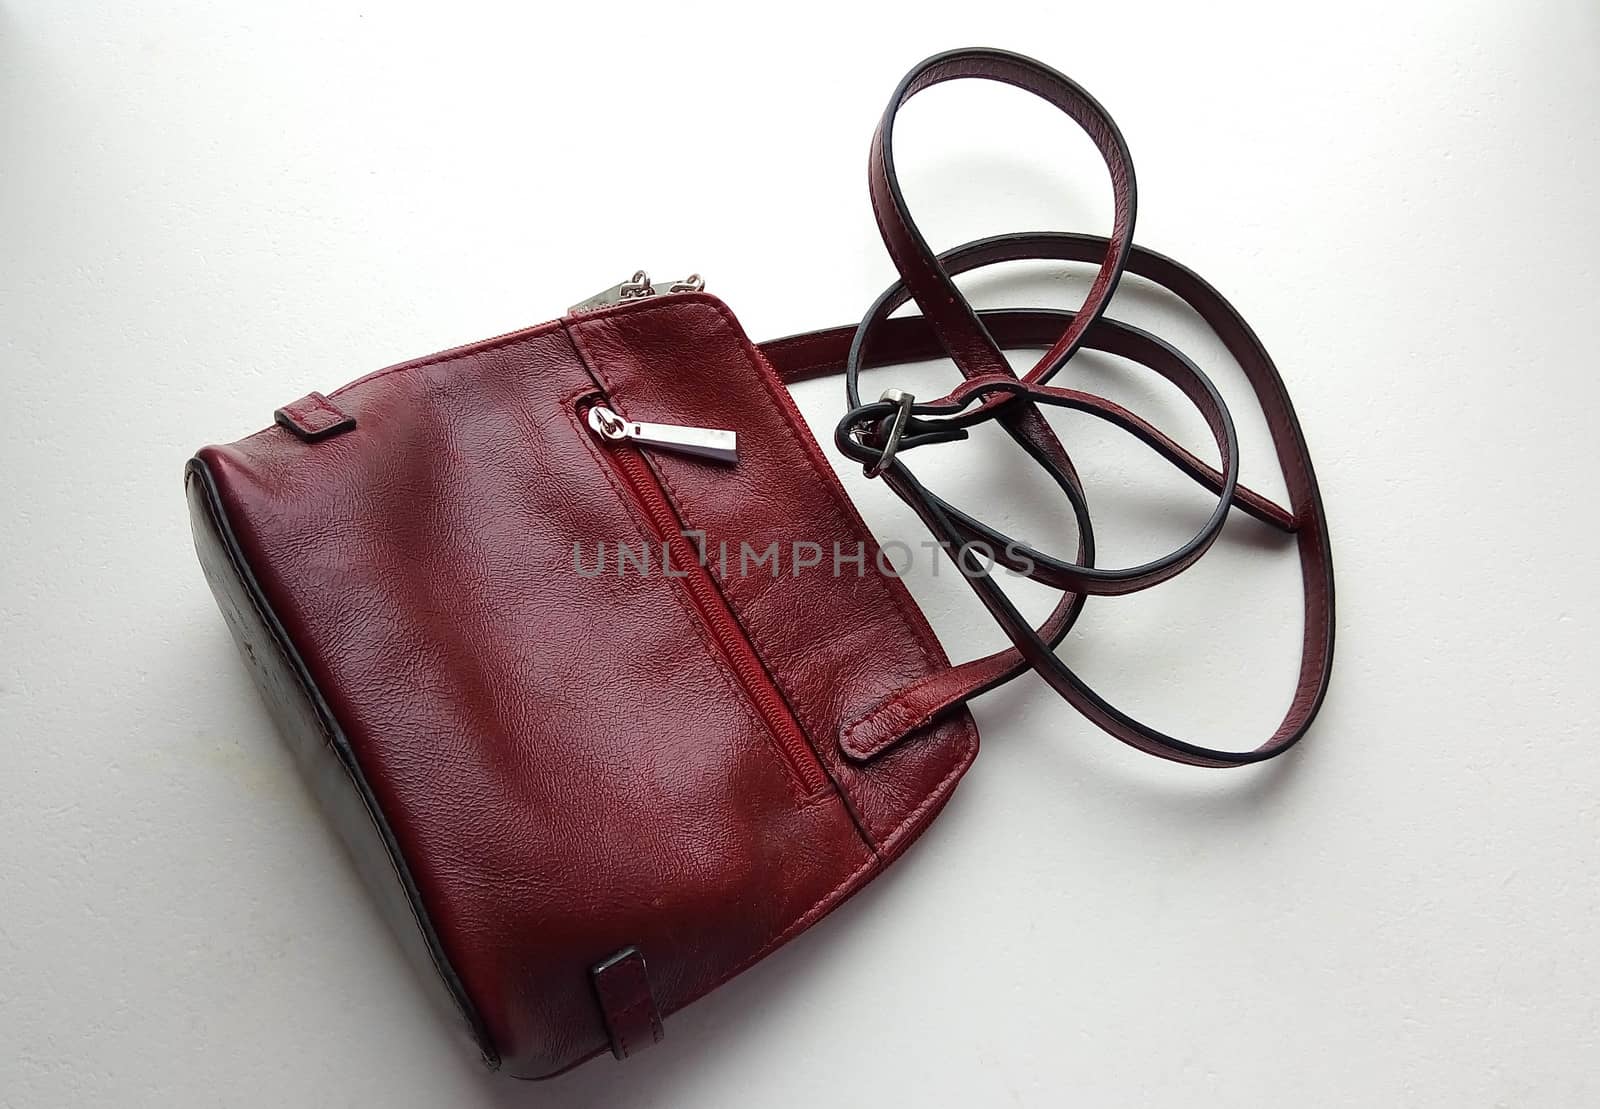 Leather handbag on white background.bag accessory case